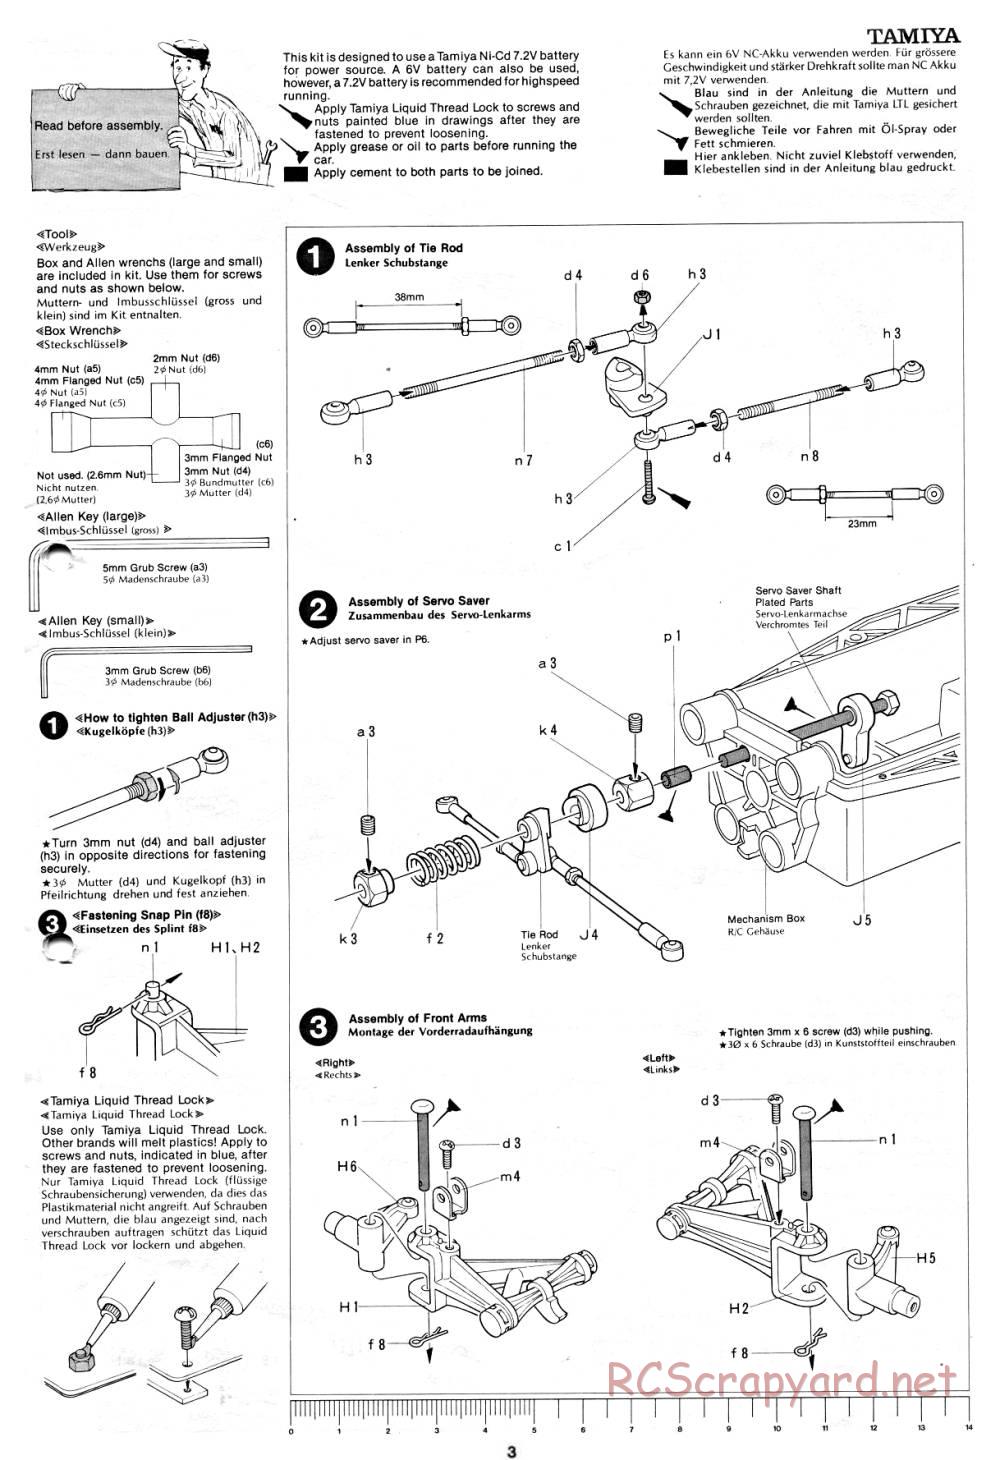 Tamiya - Opel Ascona 400 Rally - 58037 - Manual - Page 3